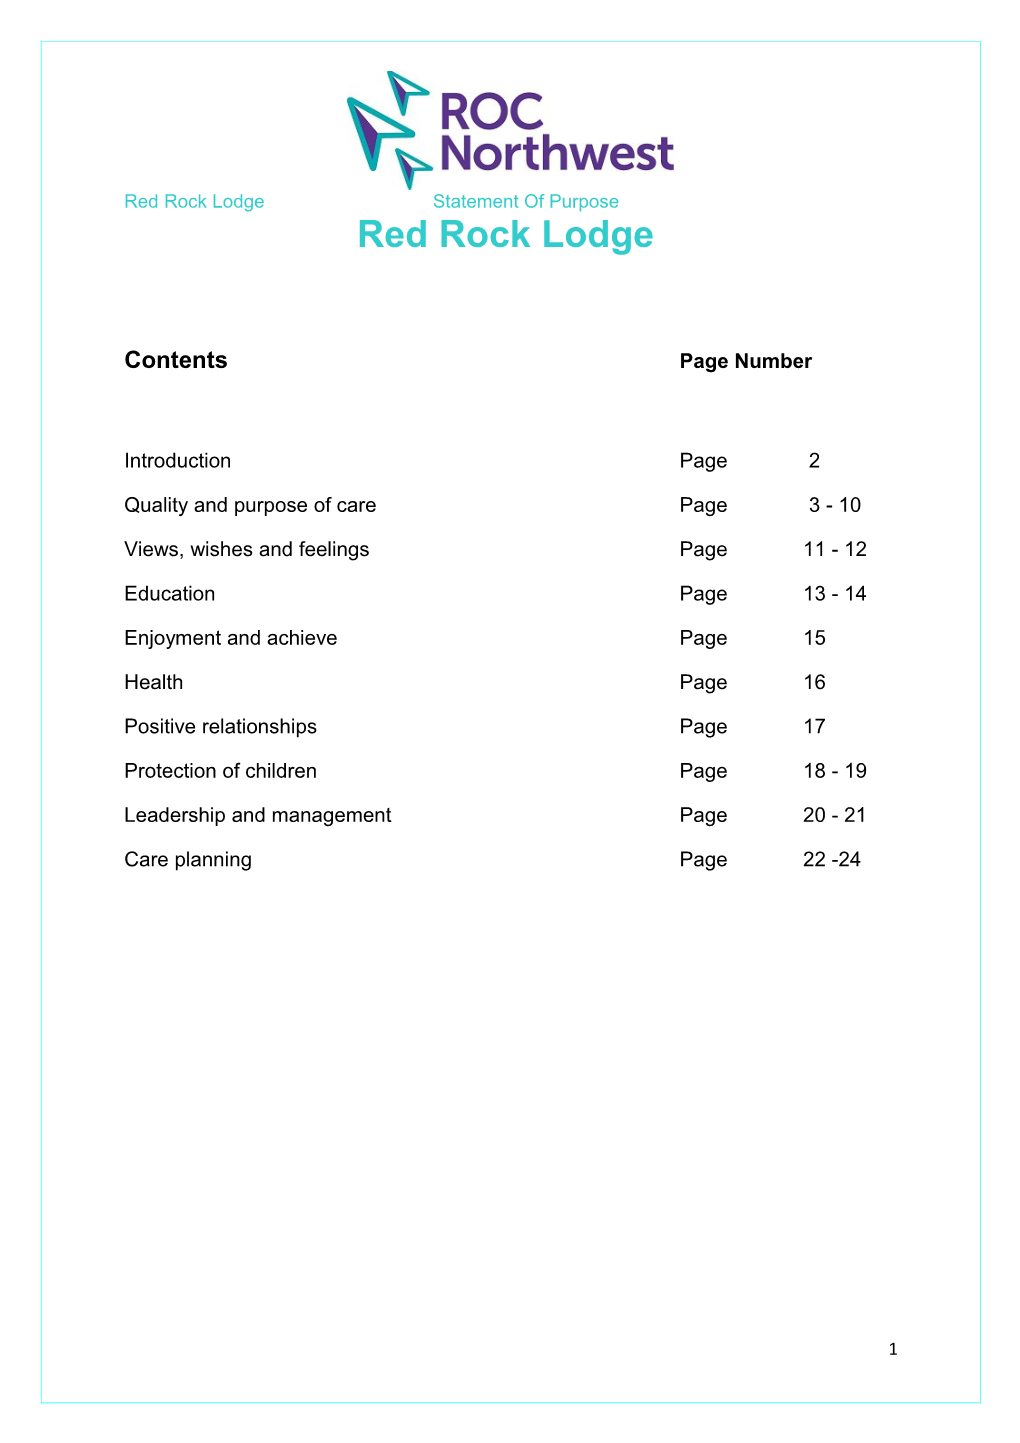 Red Rock Lodge Statement of Purpose